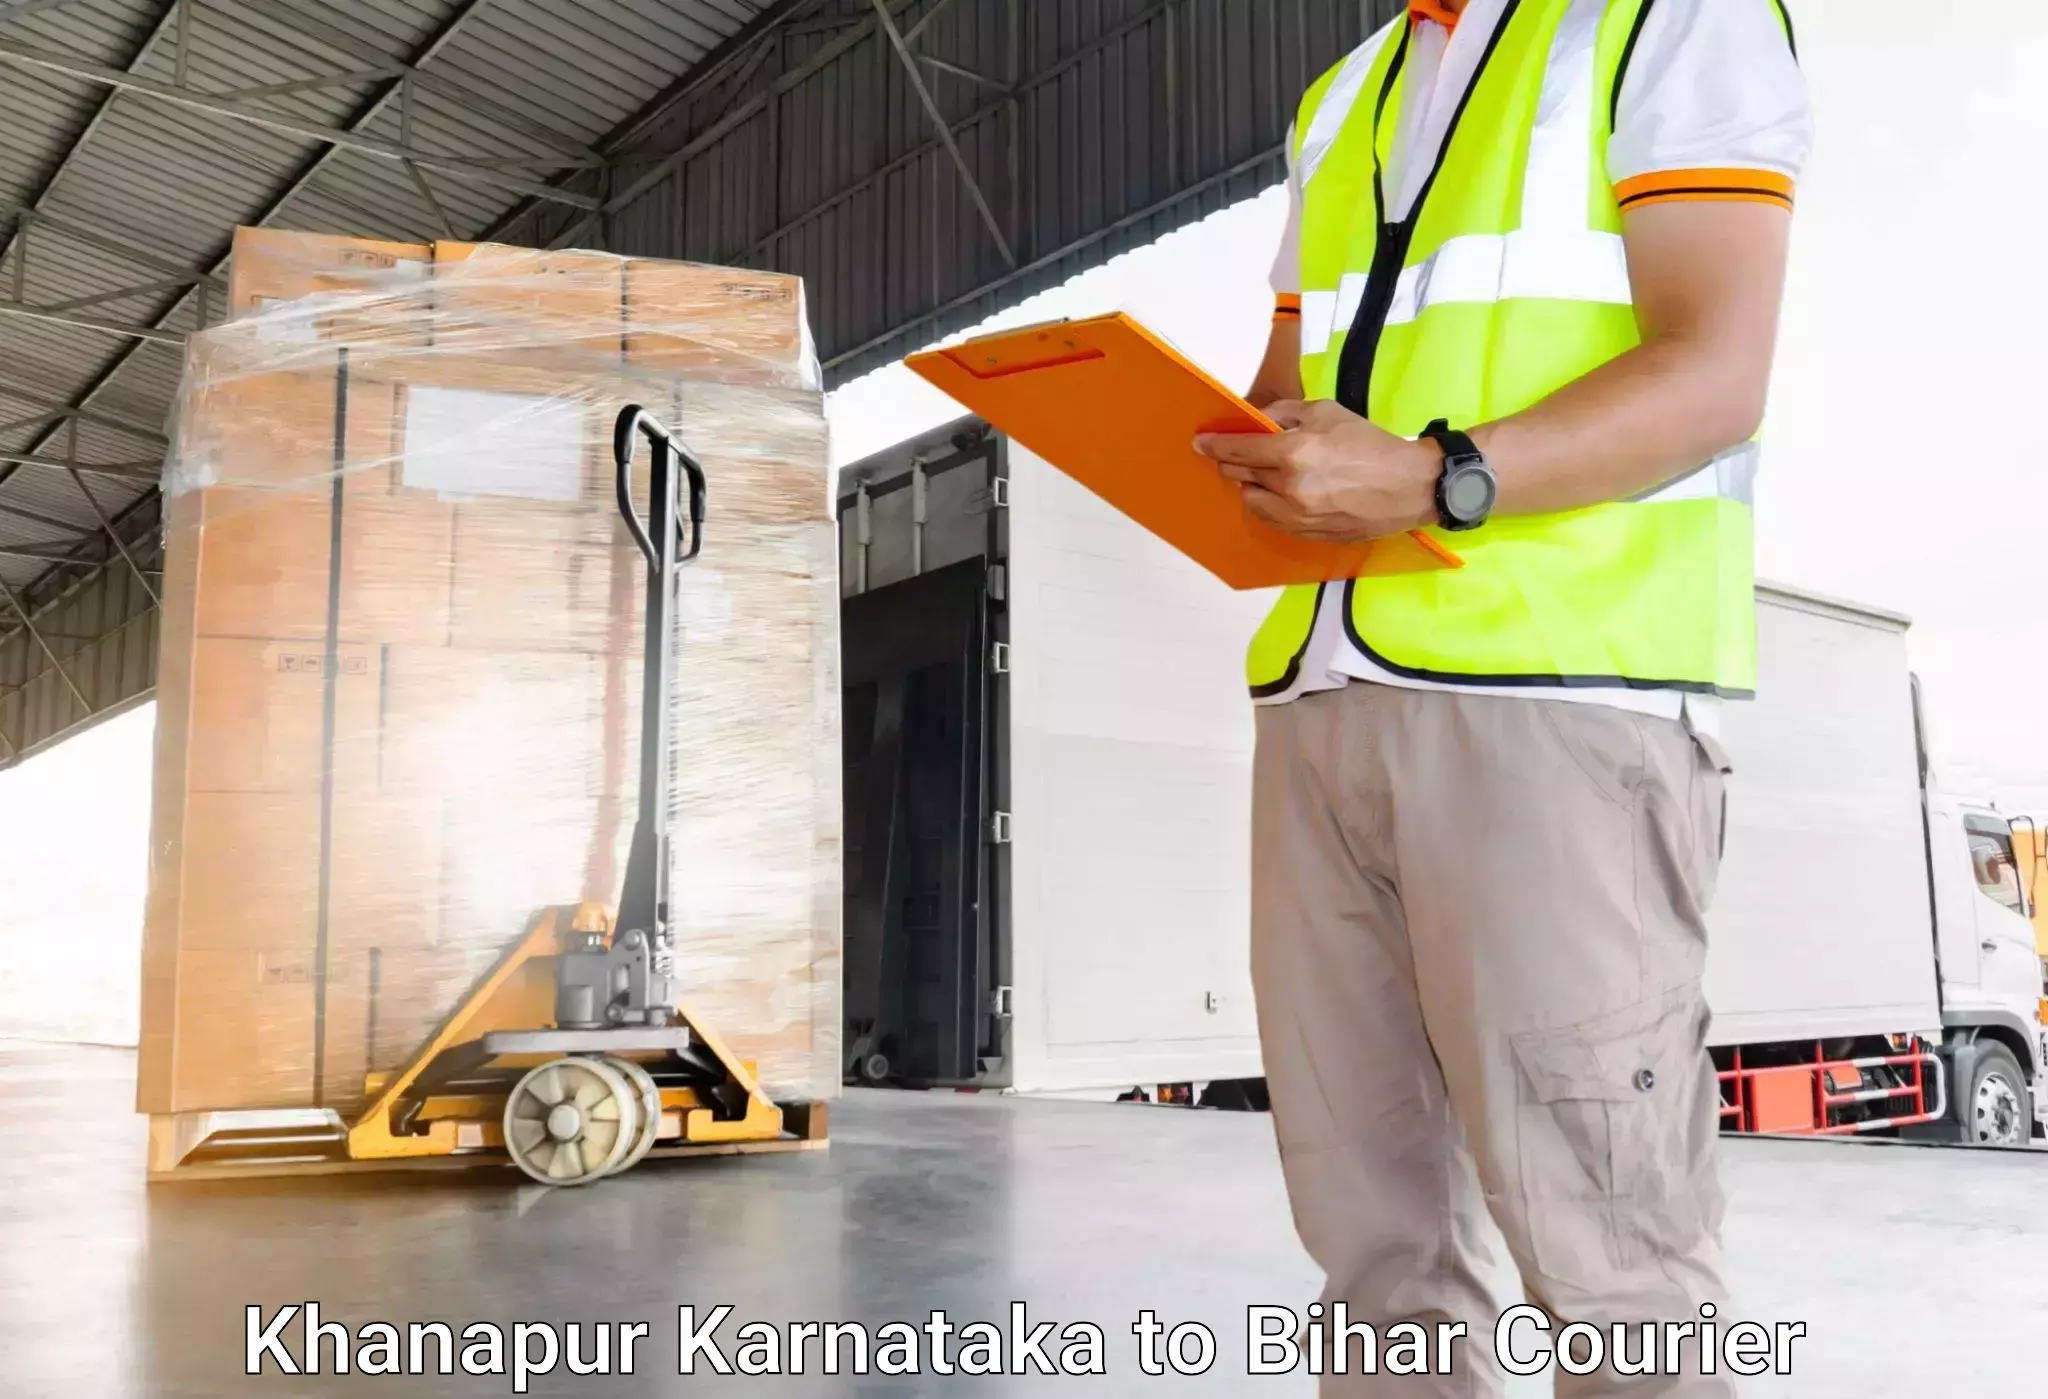 Baggage transport cost in Khanapur Karnataka to Rajpur